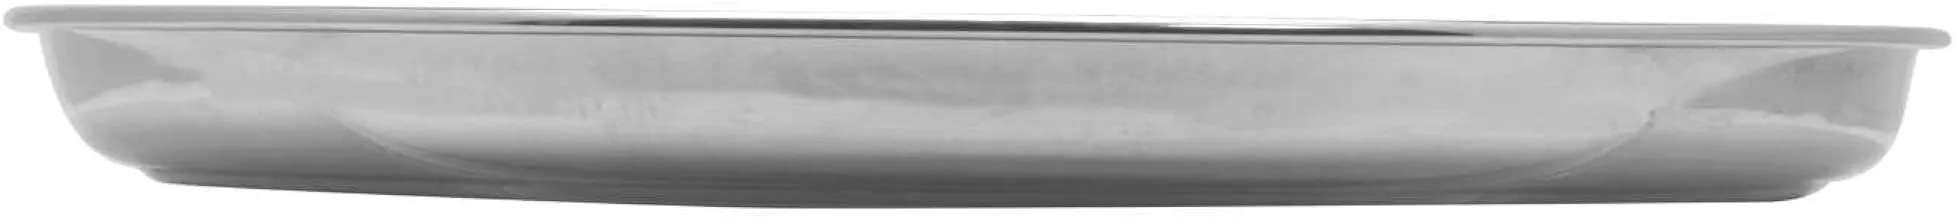 Raj Steel Plate - STT014,Grey